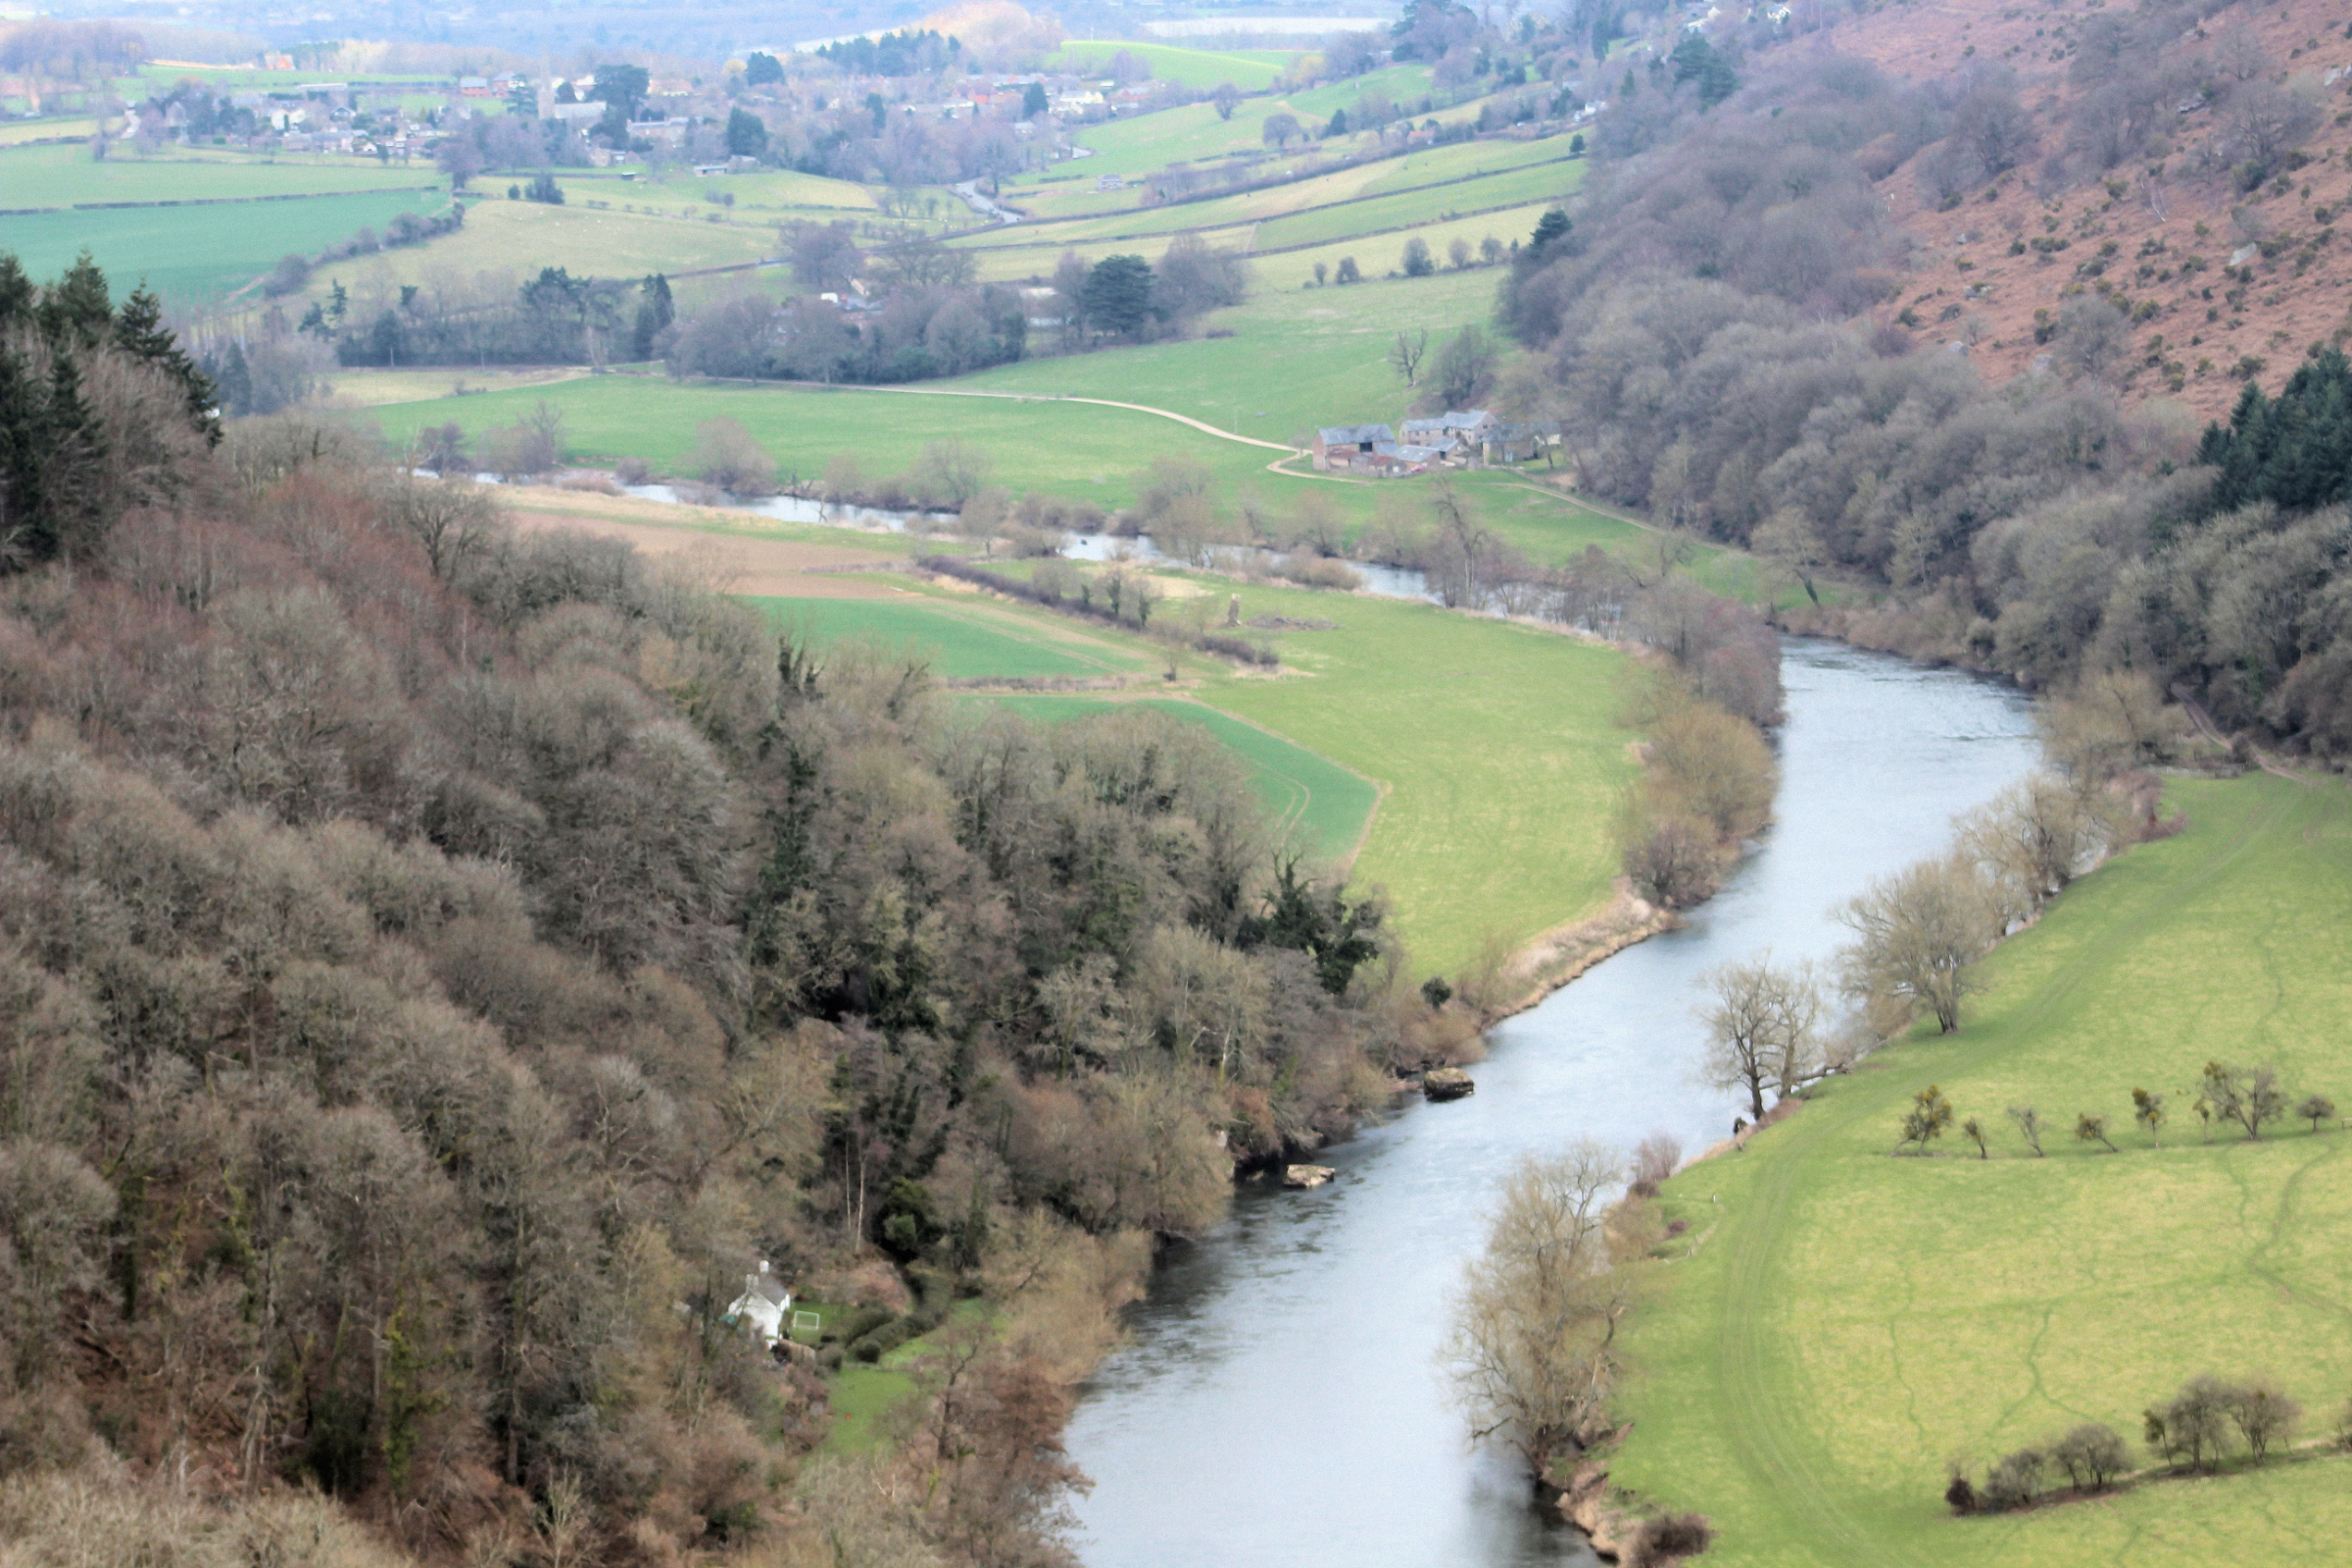 Birdseye view of the river wye